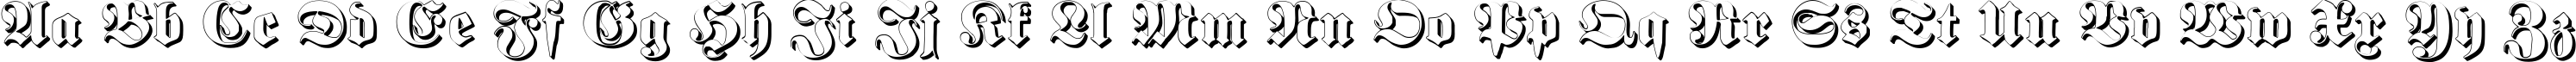 Пример написания английского алфавита шрифтом Proclamate Embossed Heavy